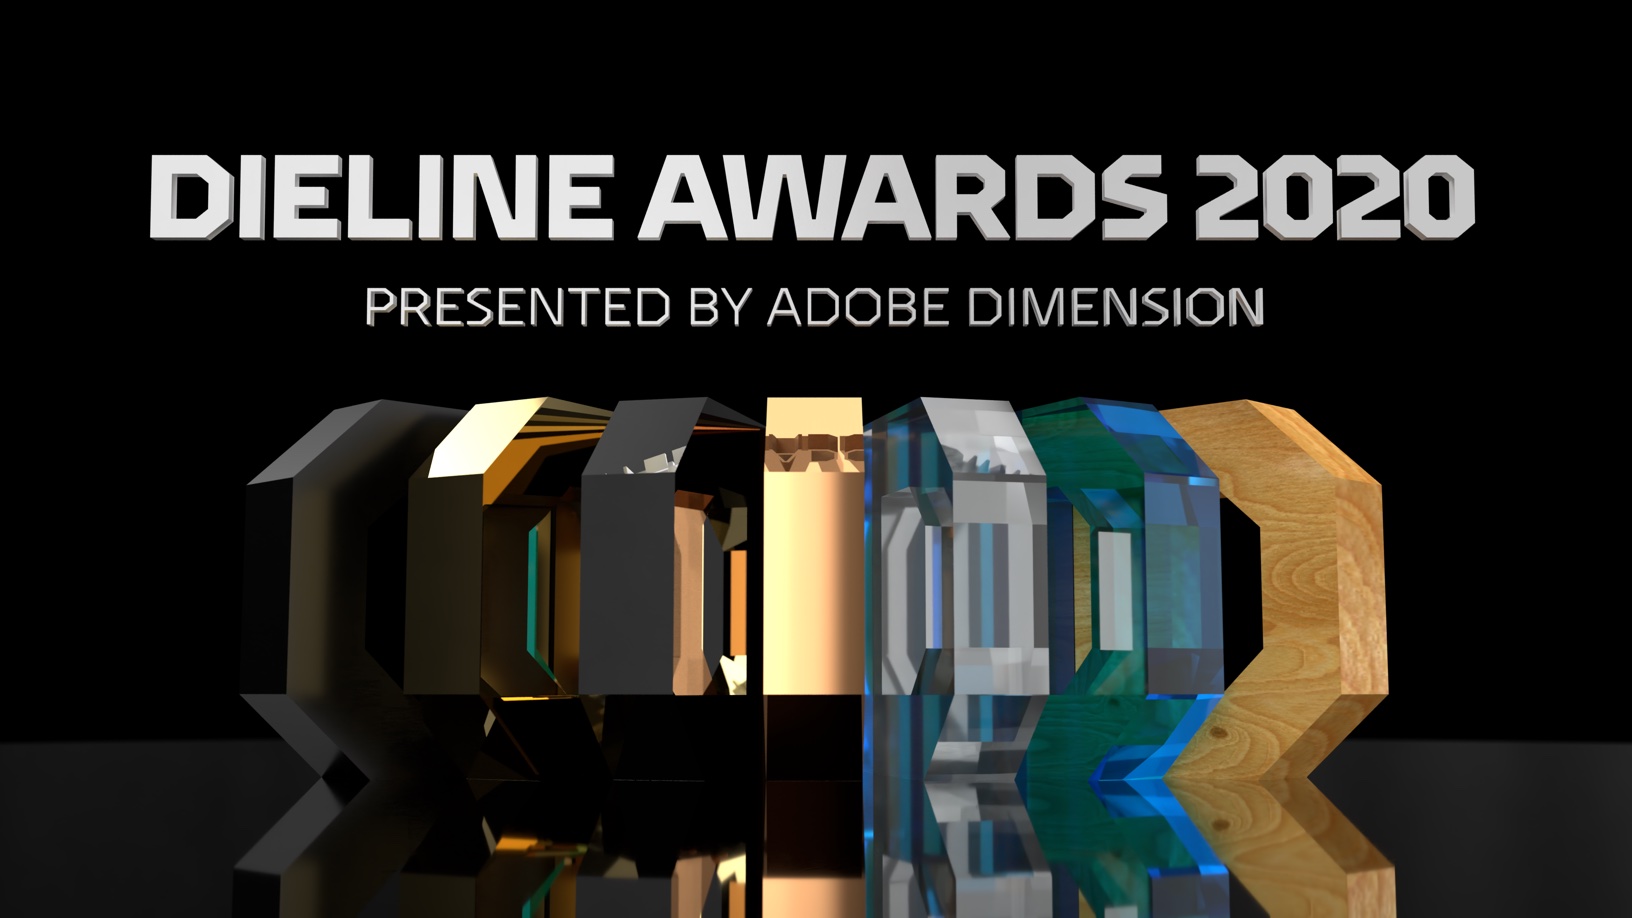 The World’s Best Packaging: Dieline Awards 2020 Winners Revealed